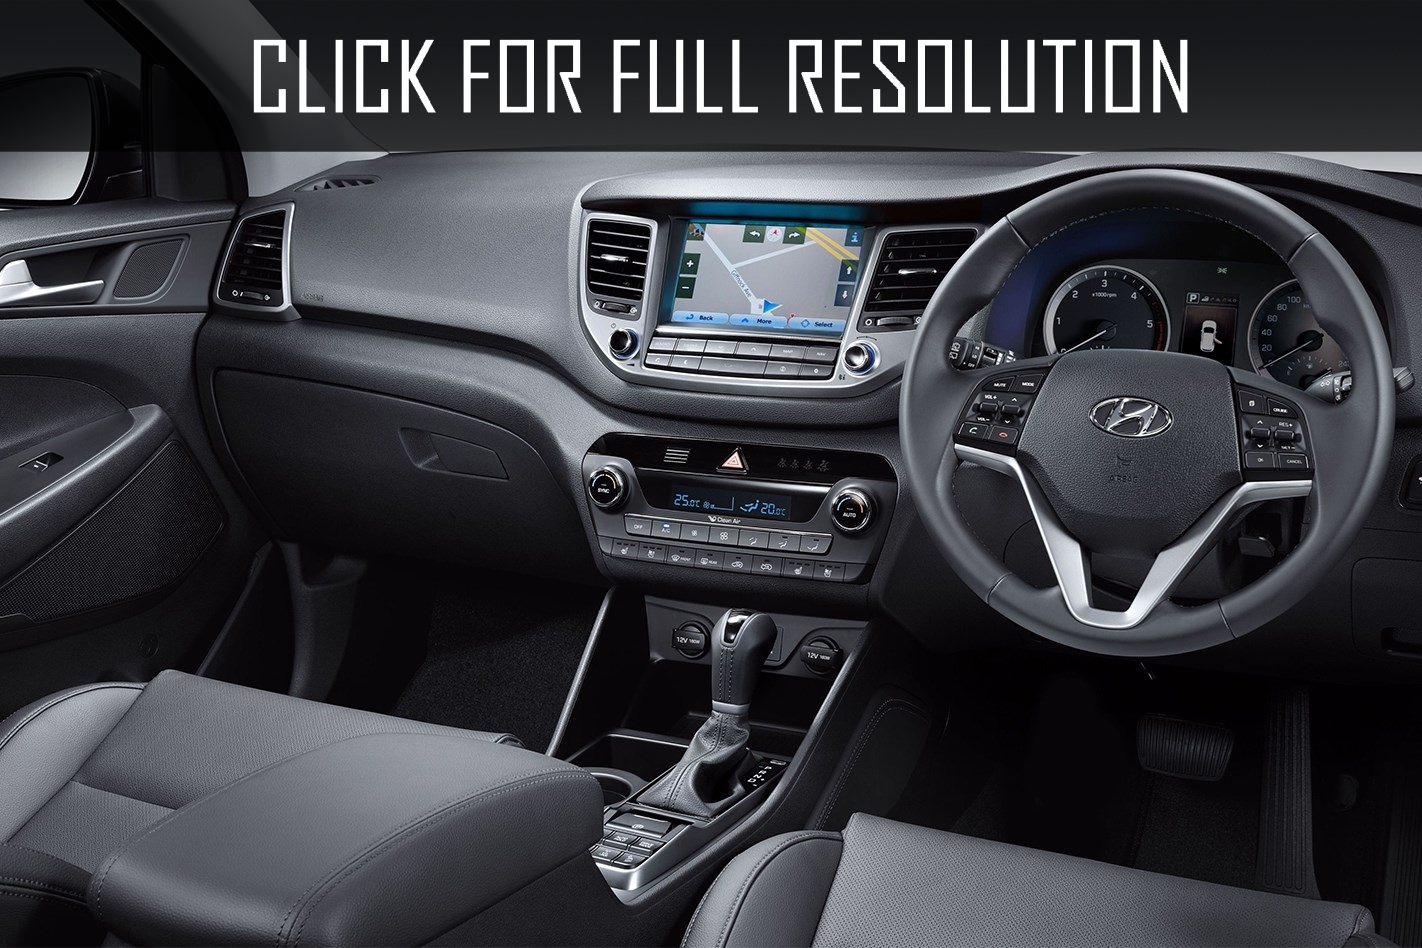 Hyundai Tucson Elite 2016